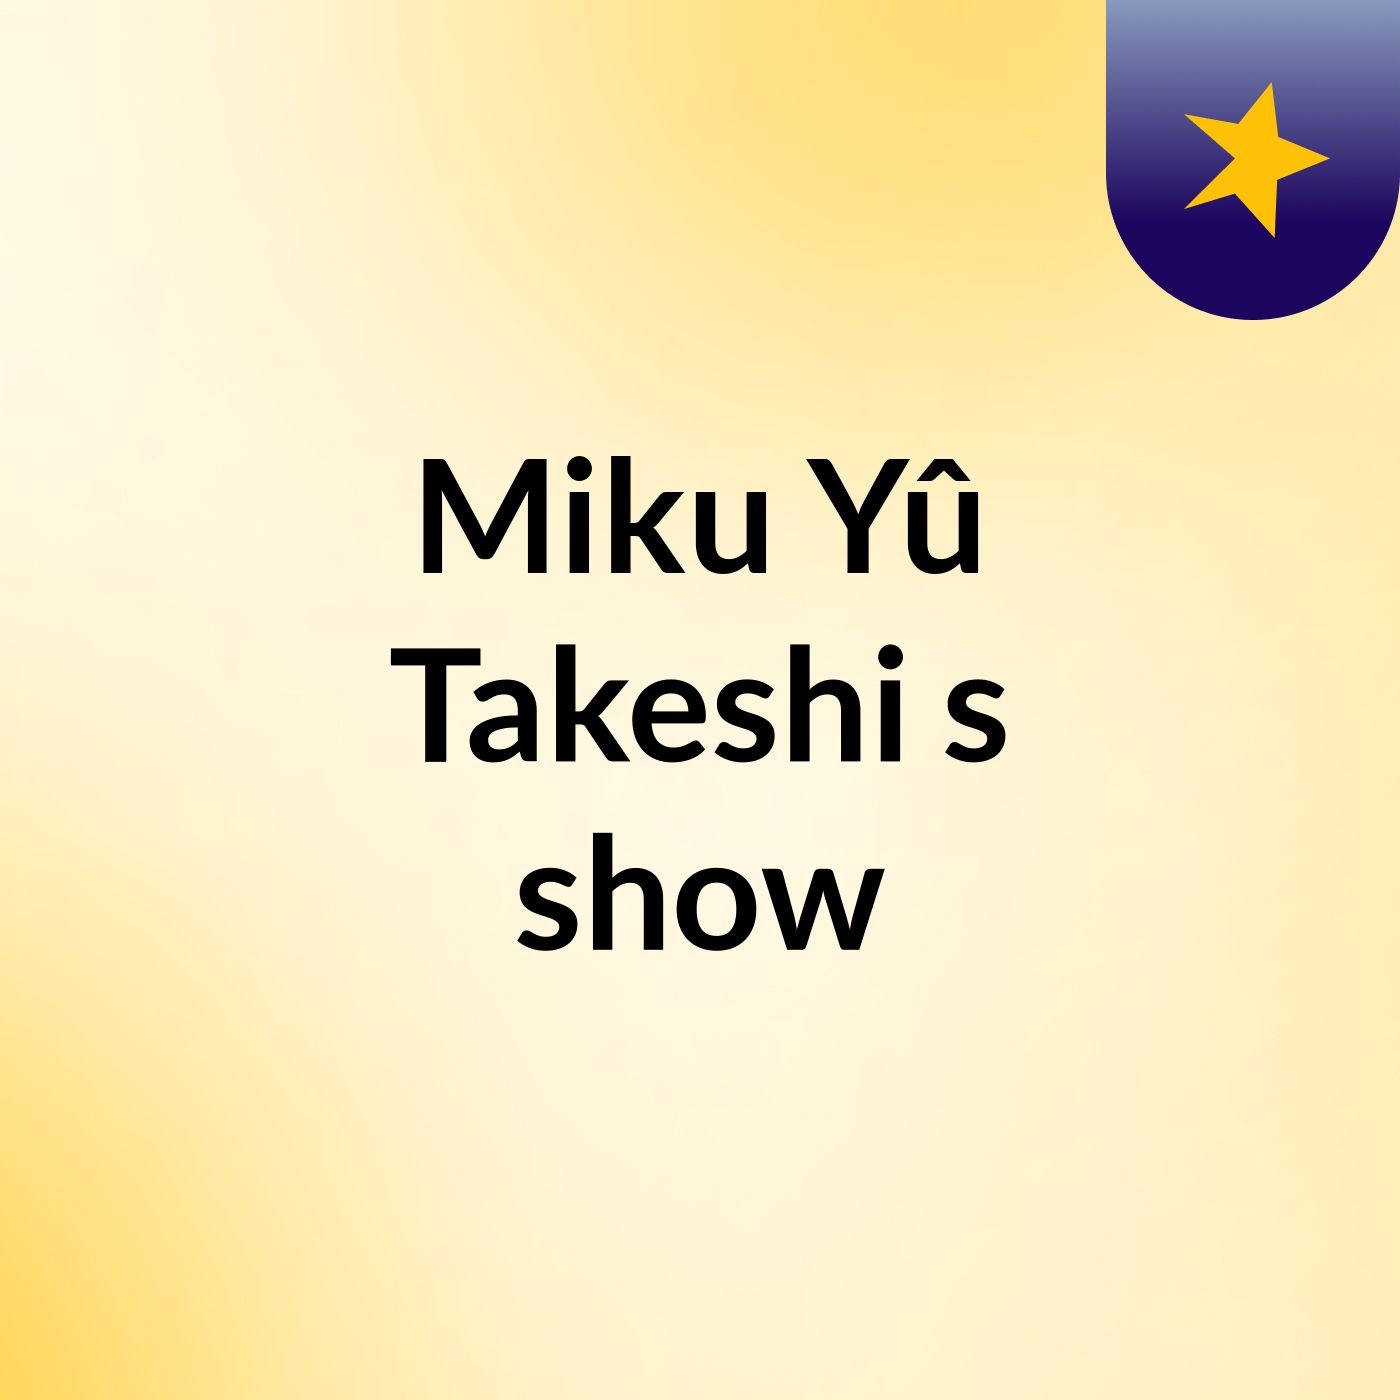 Miku Yû Takeshi's show